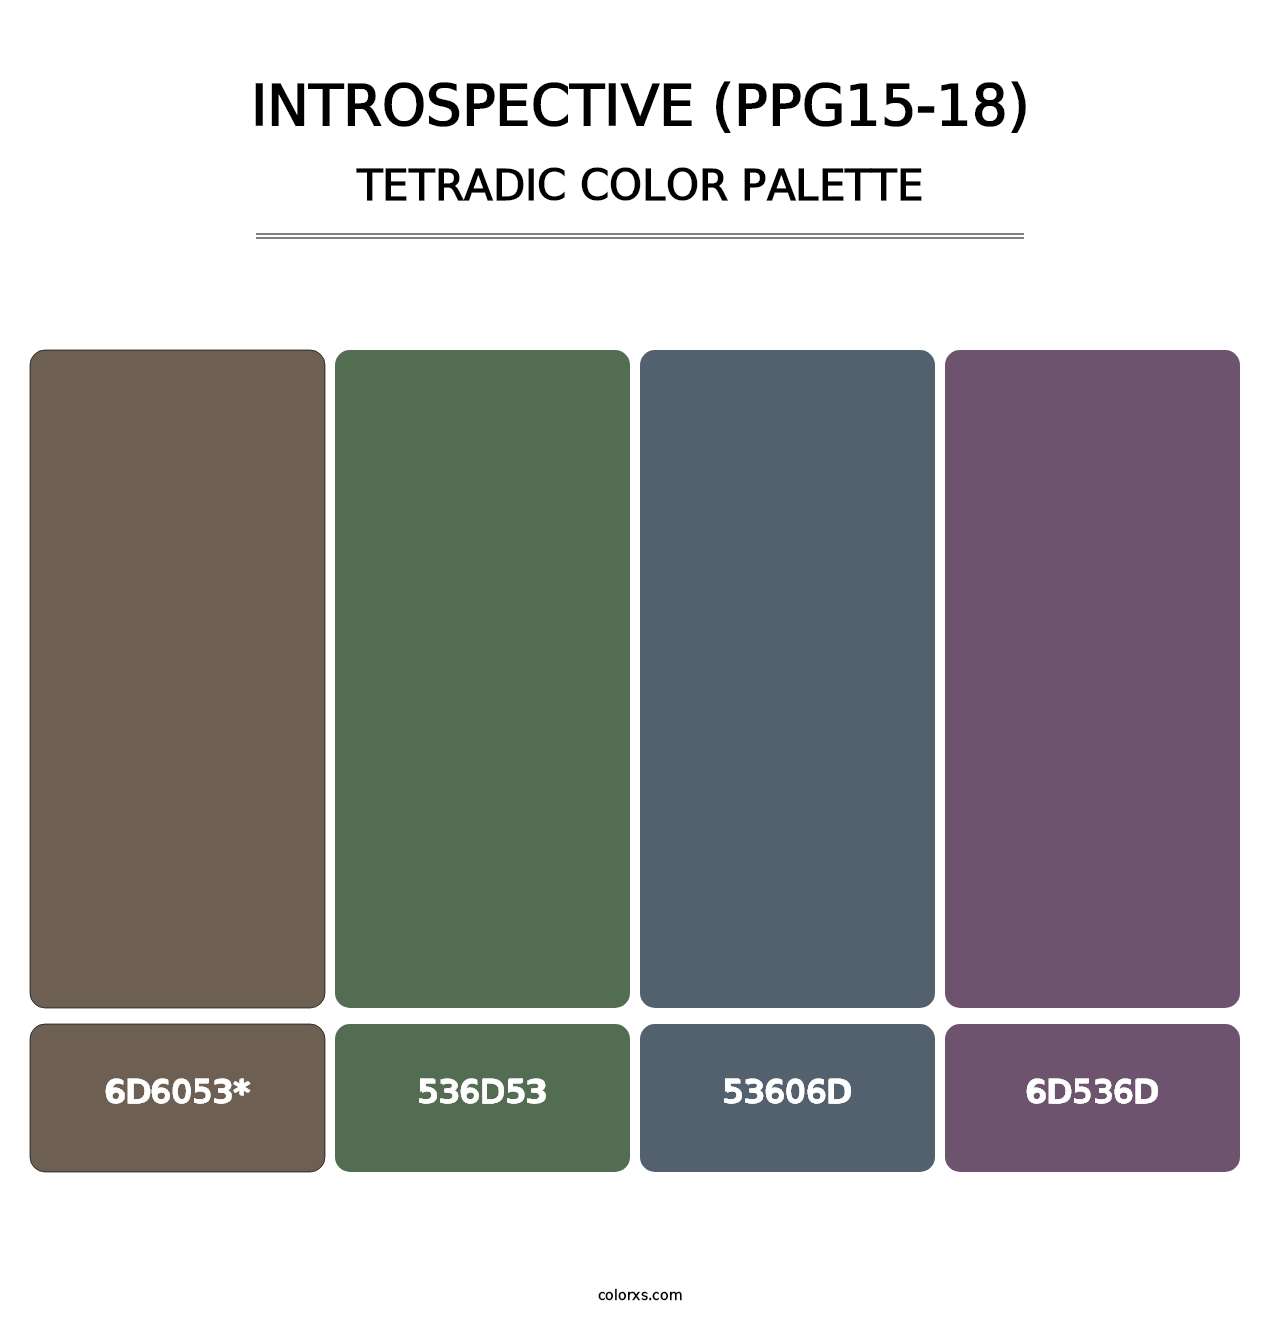 Introspective (PPG15-18) - Tetradic Color Palette